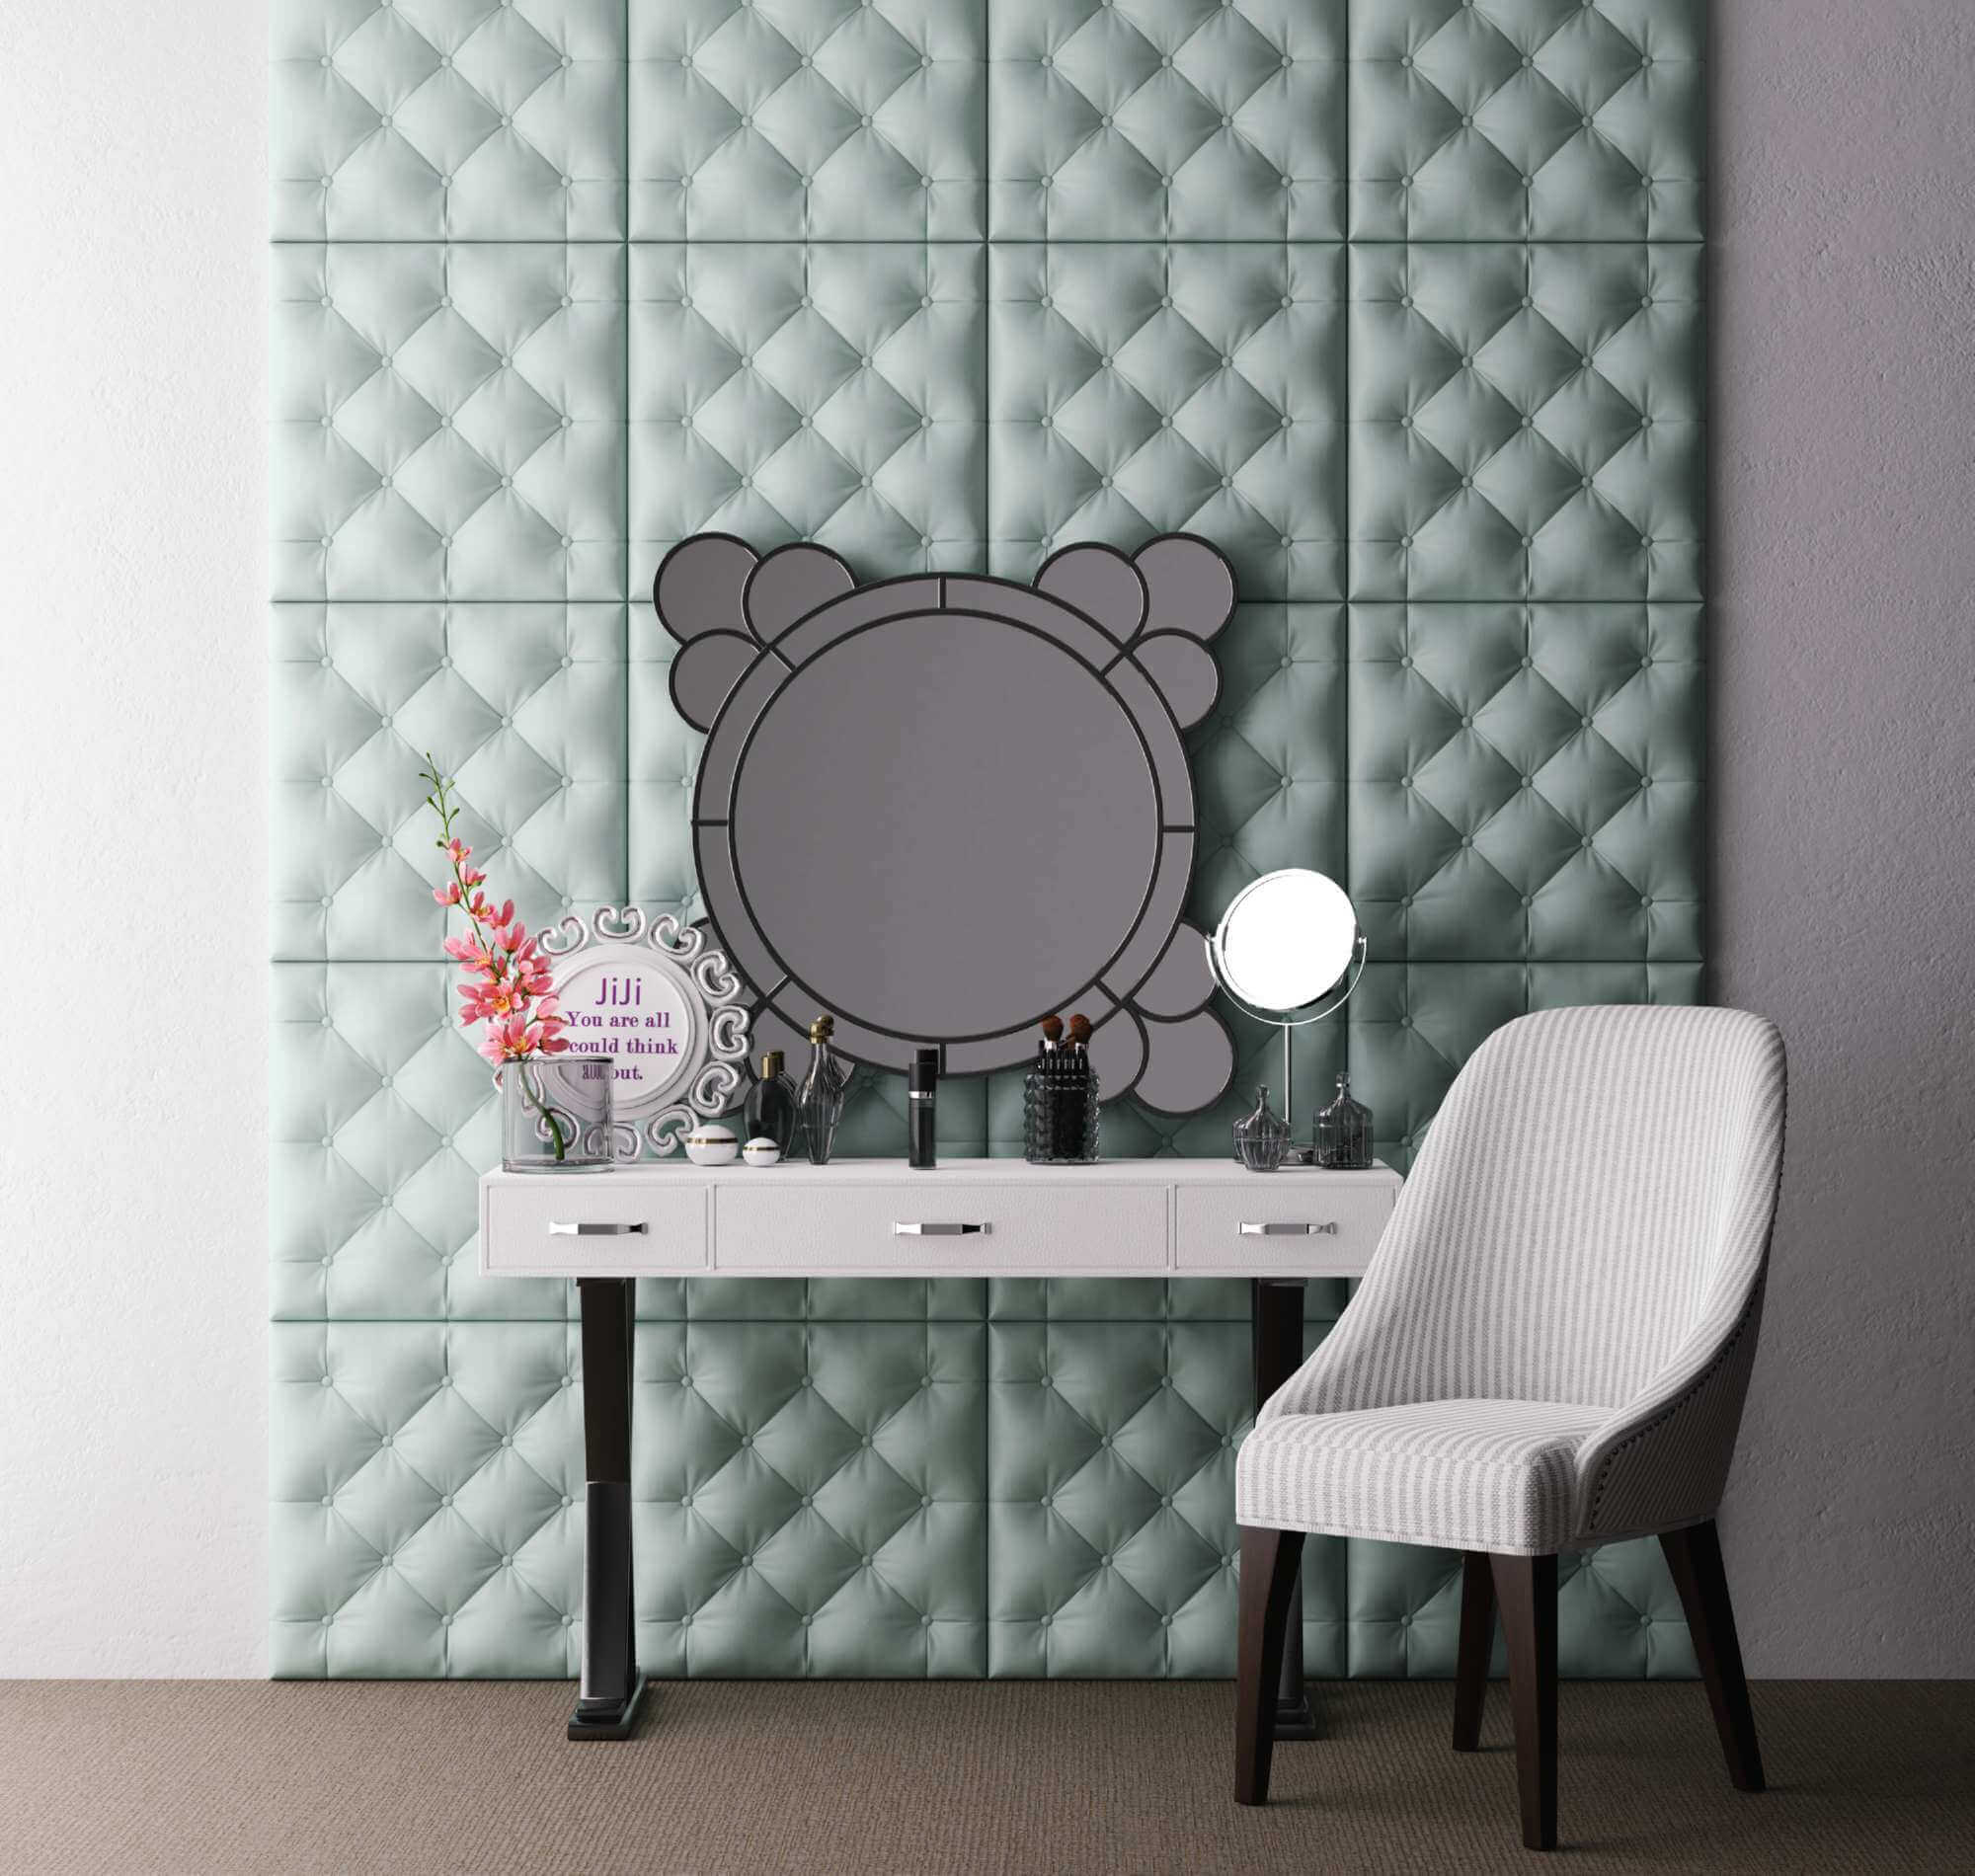 PILLOW 3D Wall Panel EPS - 3D Polystyrene Wall Panels | DecorMania